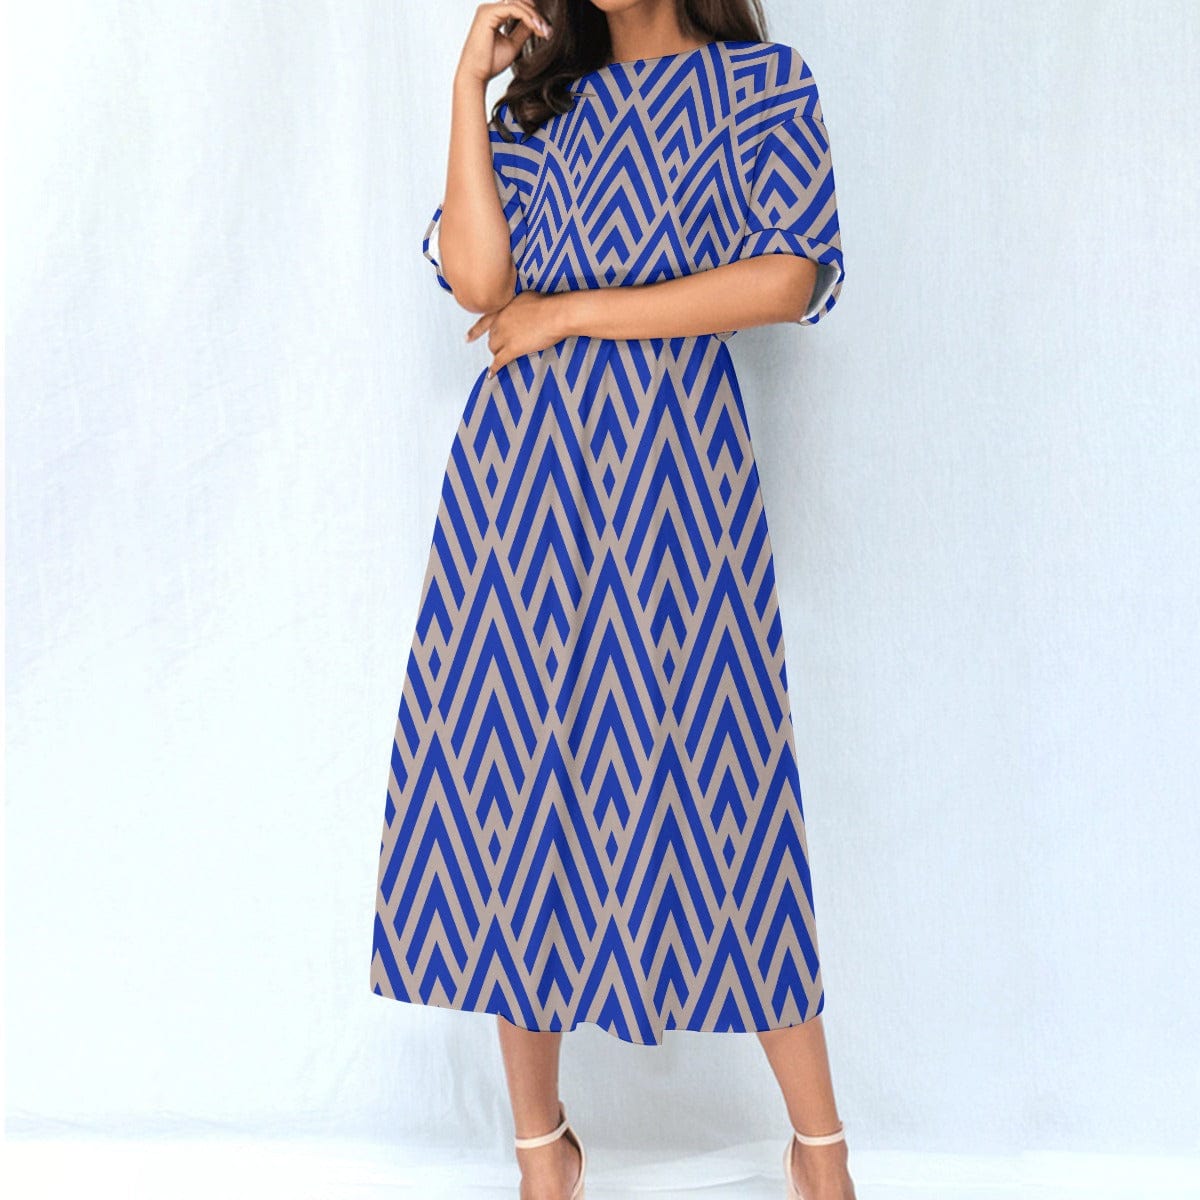 Yoycol Dresses 2XL / Chevron Blue Azul Azteca - All-Over Print Women's Elastic Waist Dress